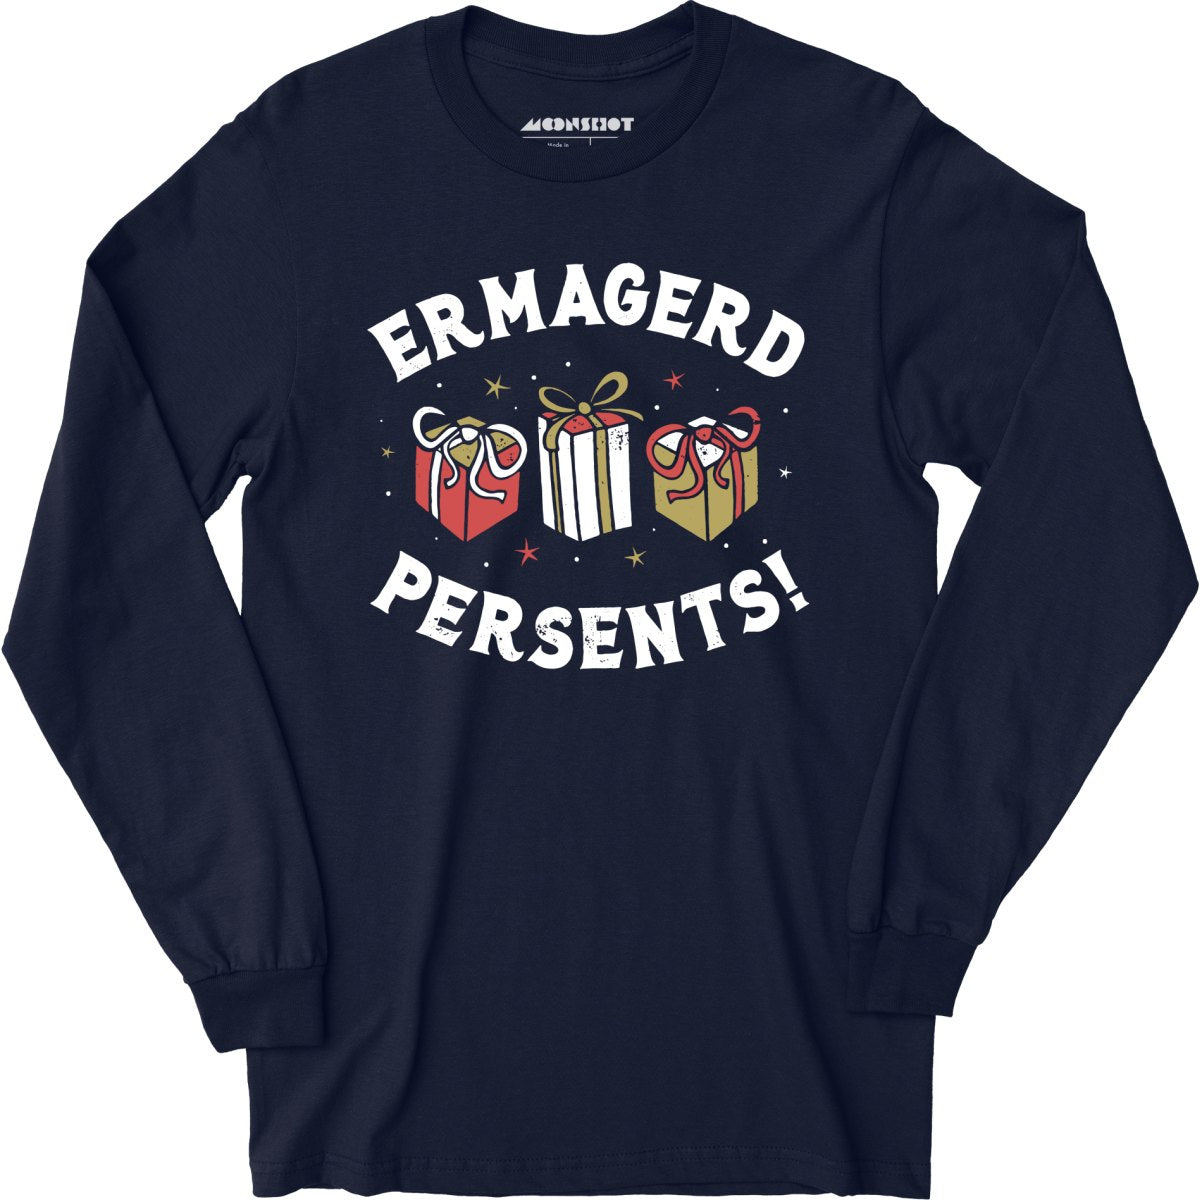 Ermagerd Persents! - Long Sleeve T-Shirt